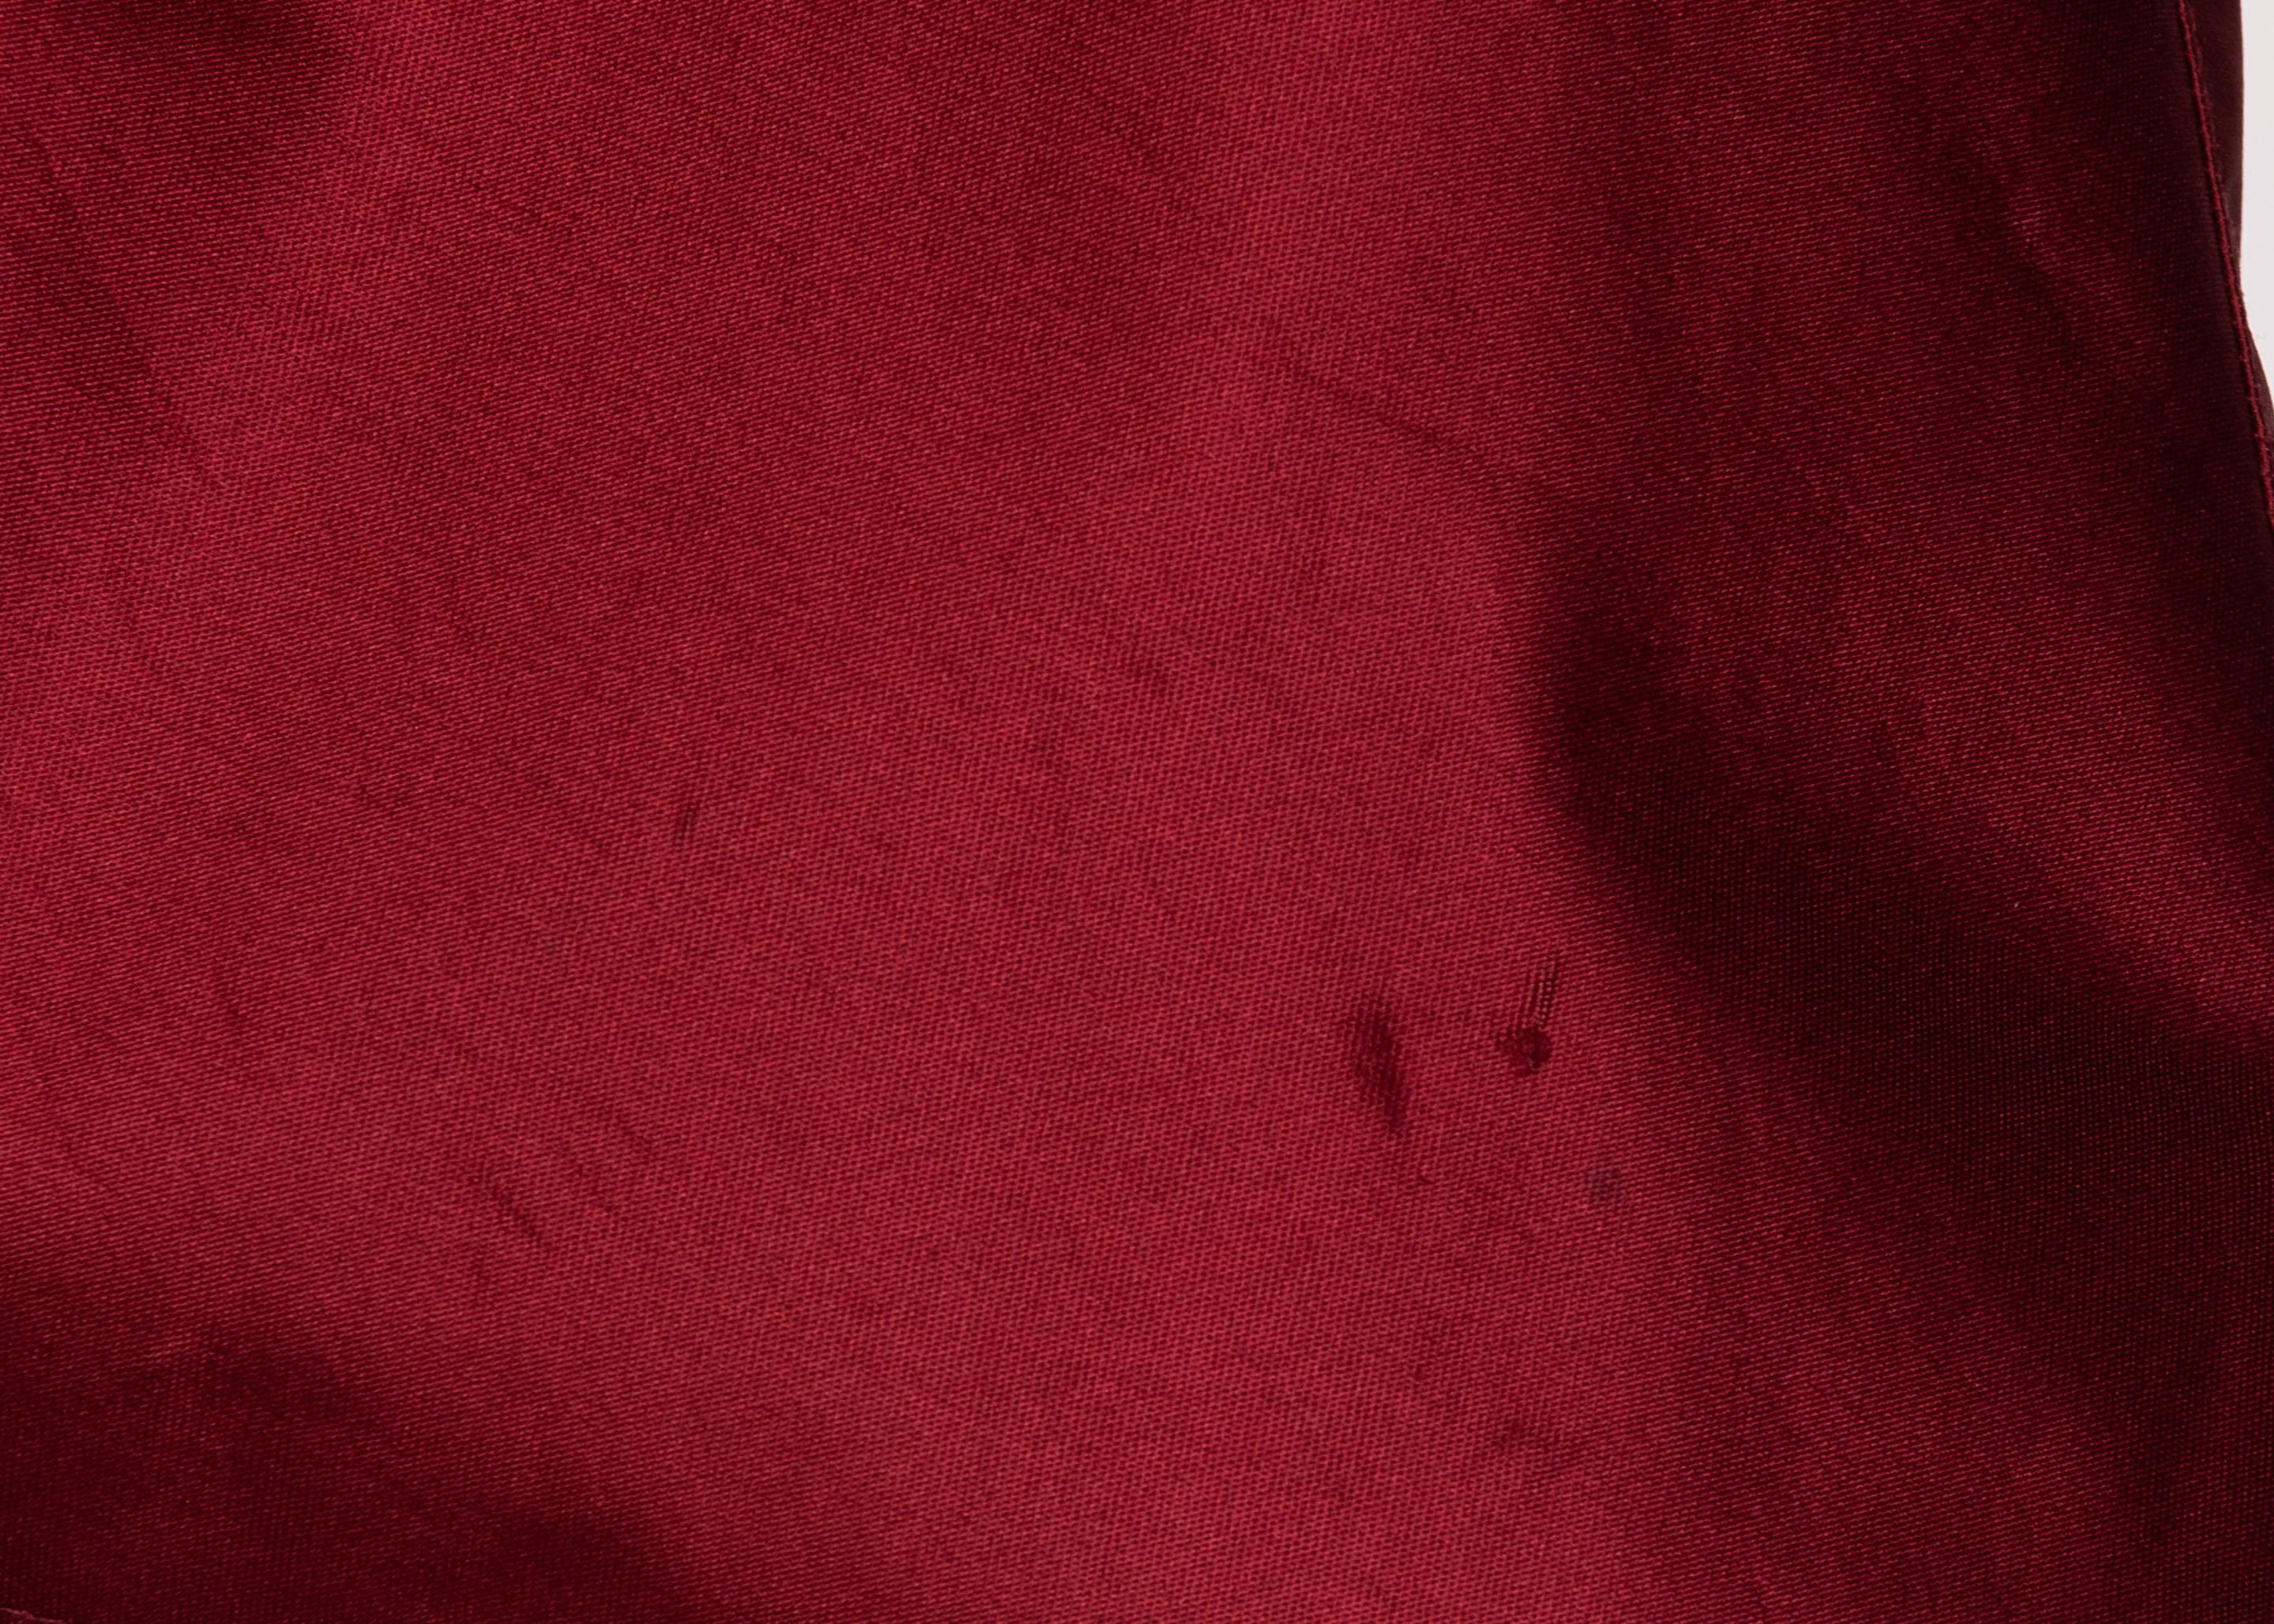 Red Chloé karl Lagerfeld Bordeaux Gabardine Belted Cape Trench Coat, 1980s